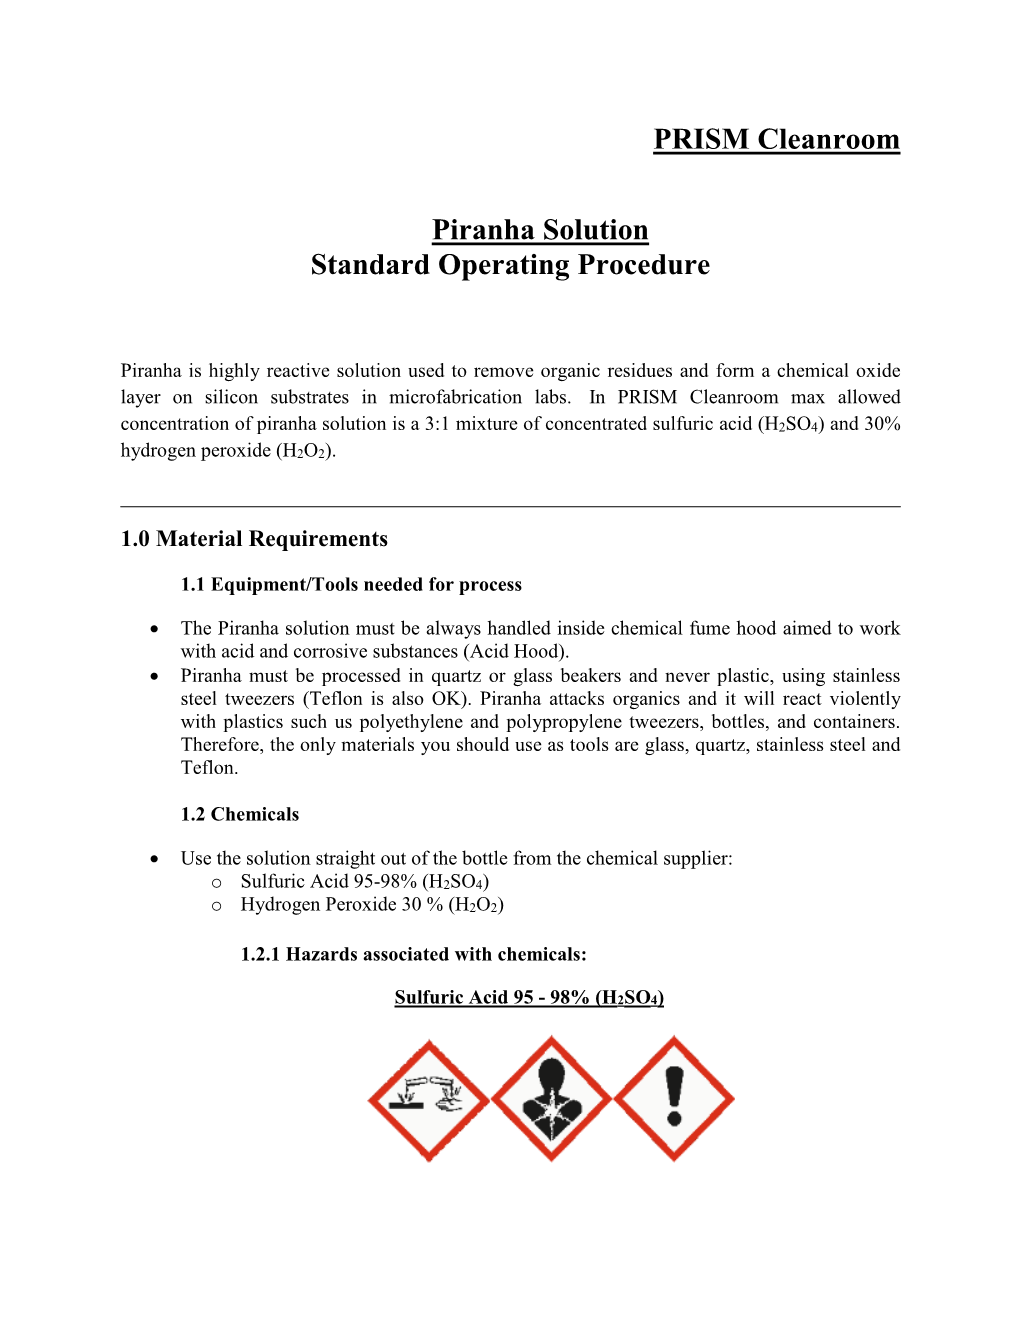 PRISM Cleanroom Piranha Solution Standard Operating Procedure